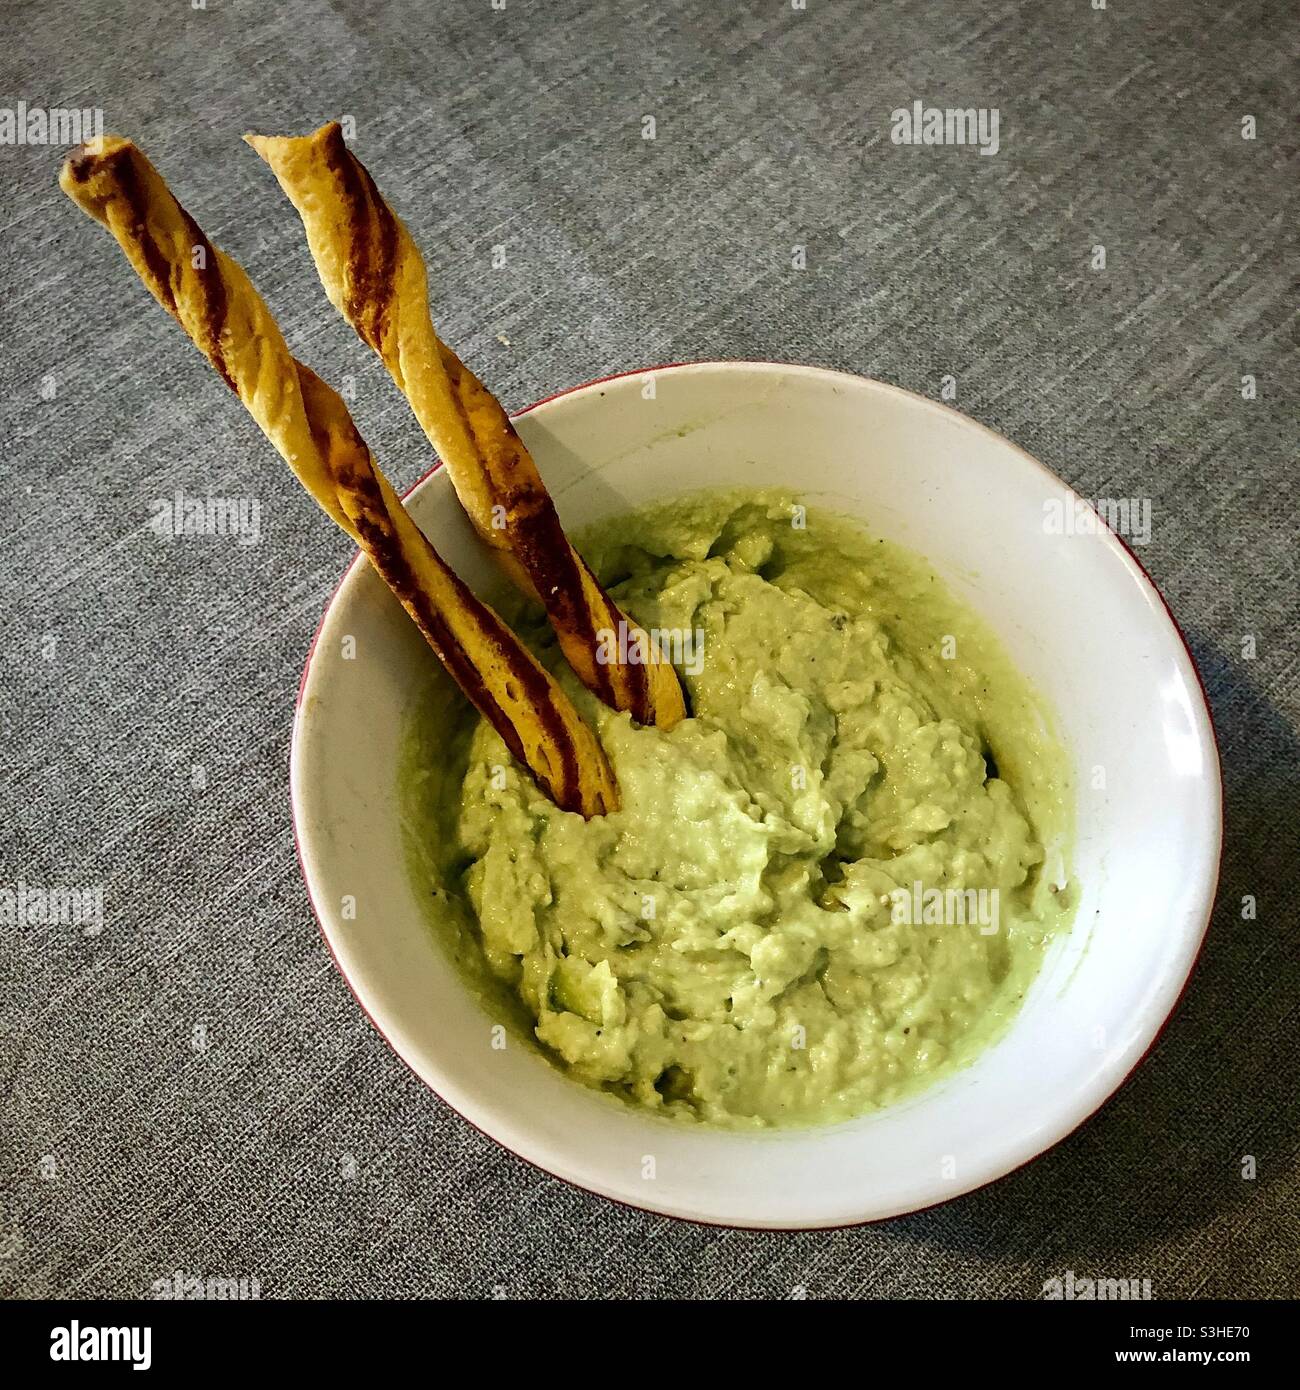 Homemade avocado dip in bowl with breadsticks. Stock Photo